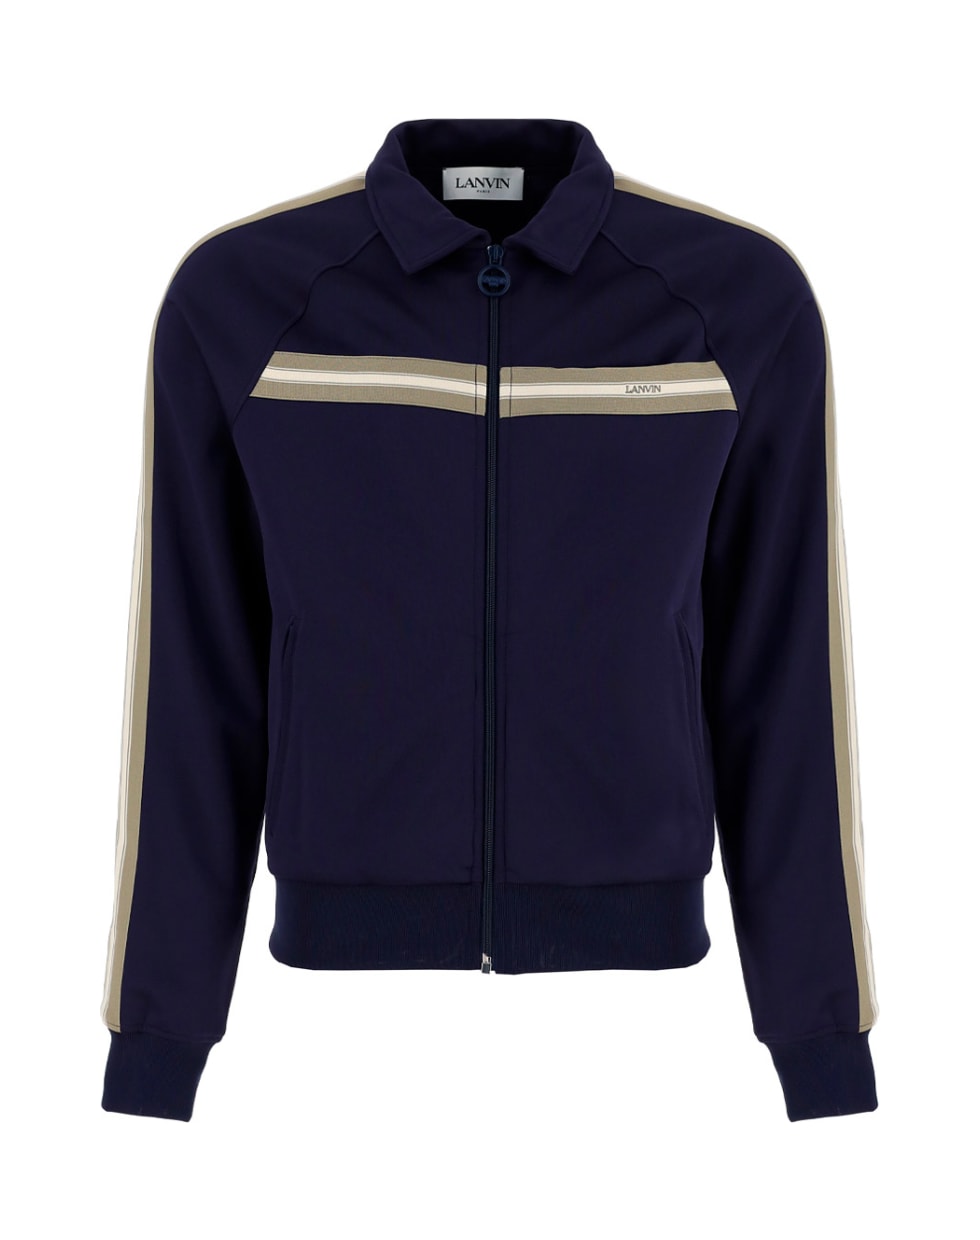 Lanvin Sweatshirt Track Suit - Navy blue